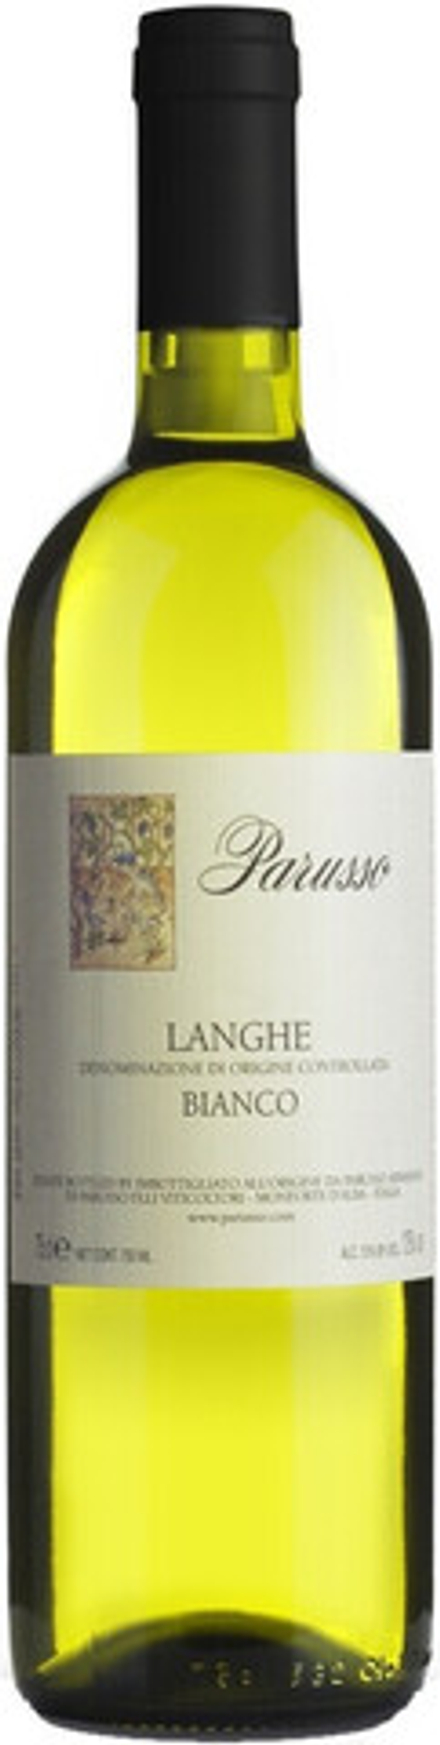 Вино Parusso Langhe Bianco Rovella, 0,75 л.